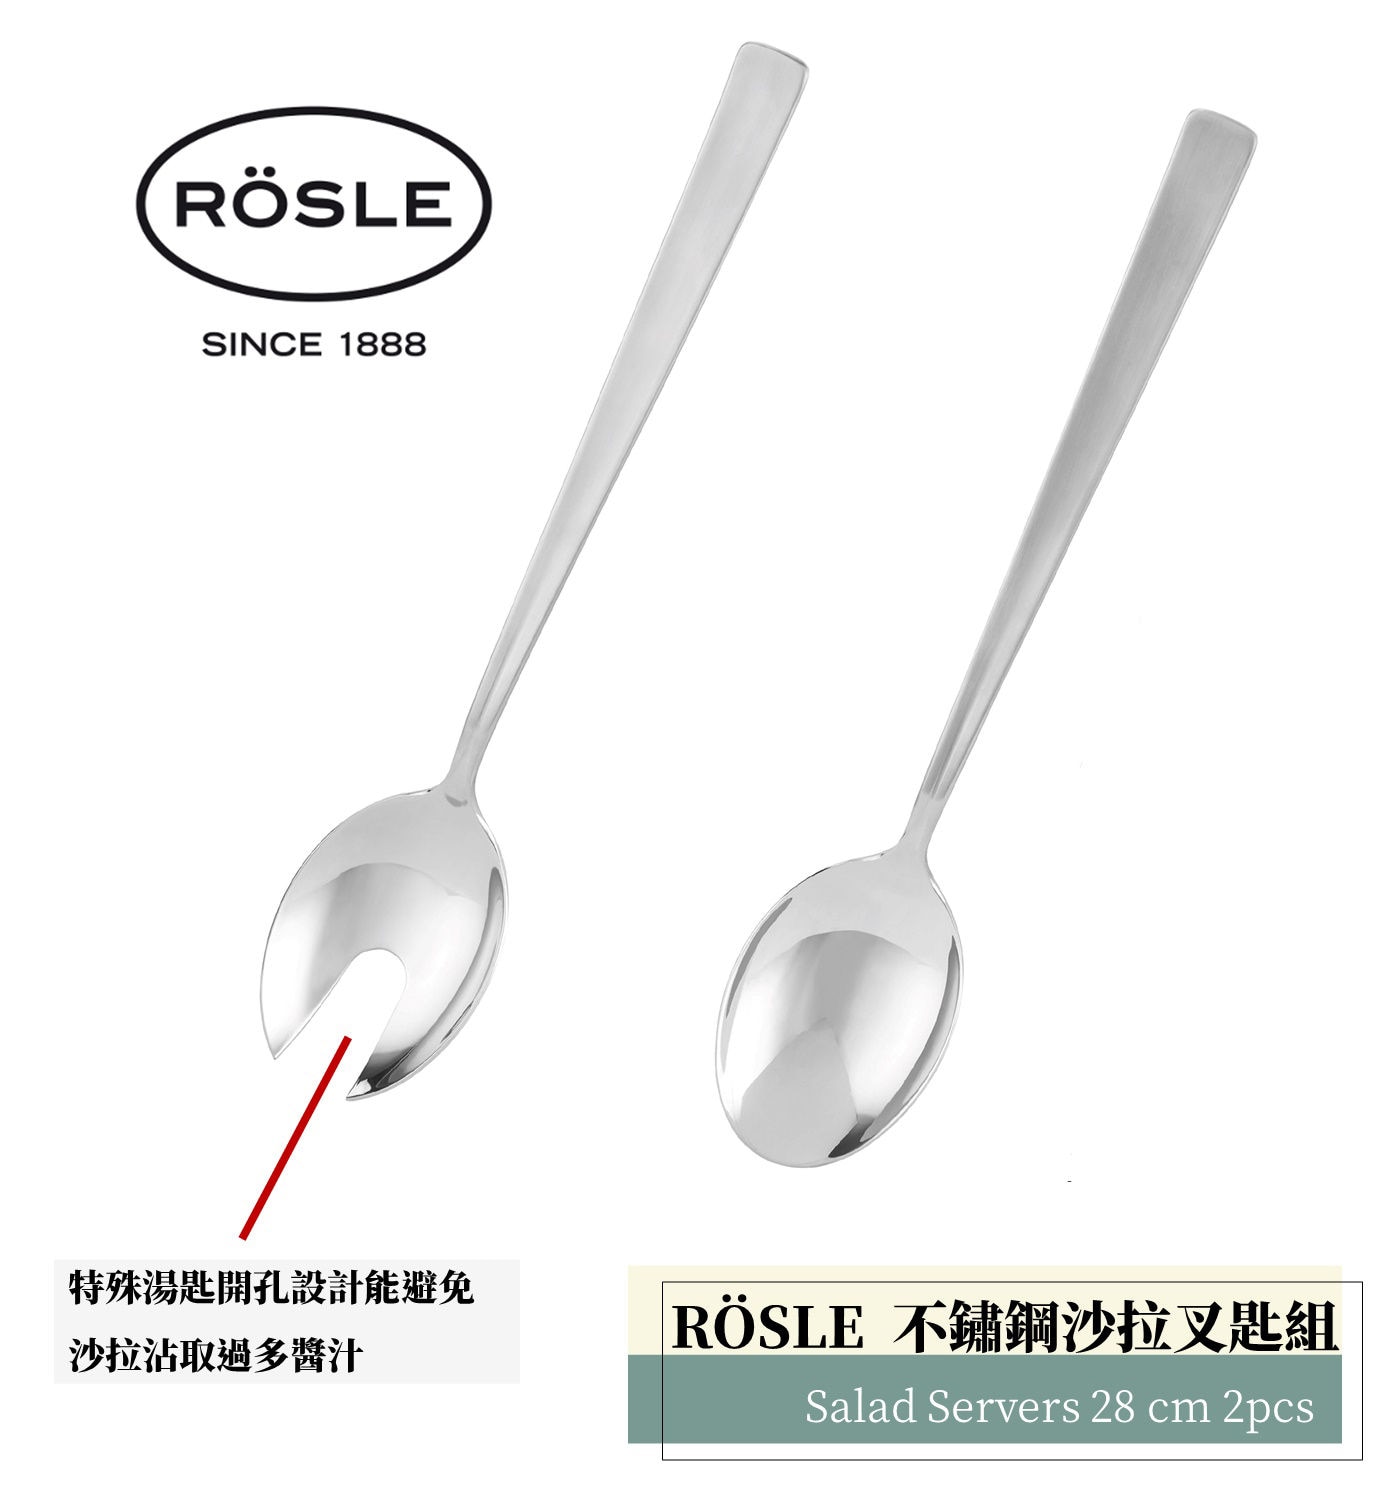 Rosle不鏽鋼沙拉叉匙組特殊湯匙開孔設計能避免沙拉沾取過多醬汁